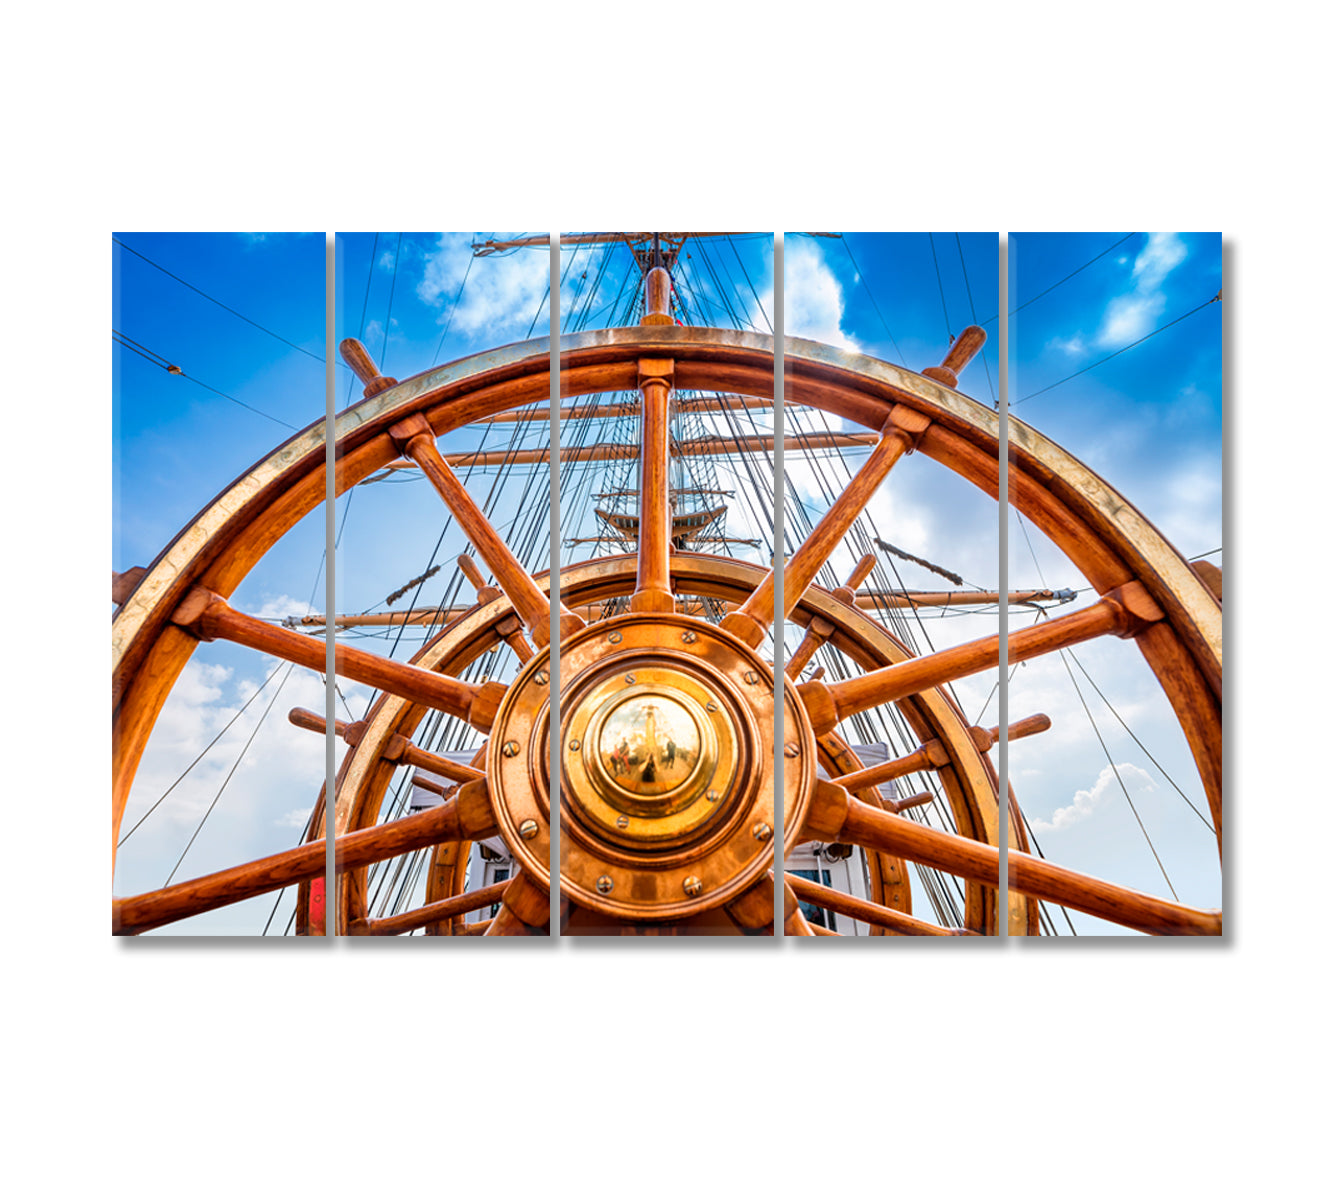 Ship's Wheel Canvas Print-Canvas Print-CetArt-5 Panels-36x24 inches-CetArt